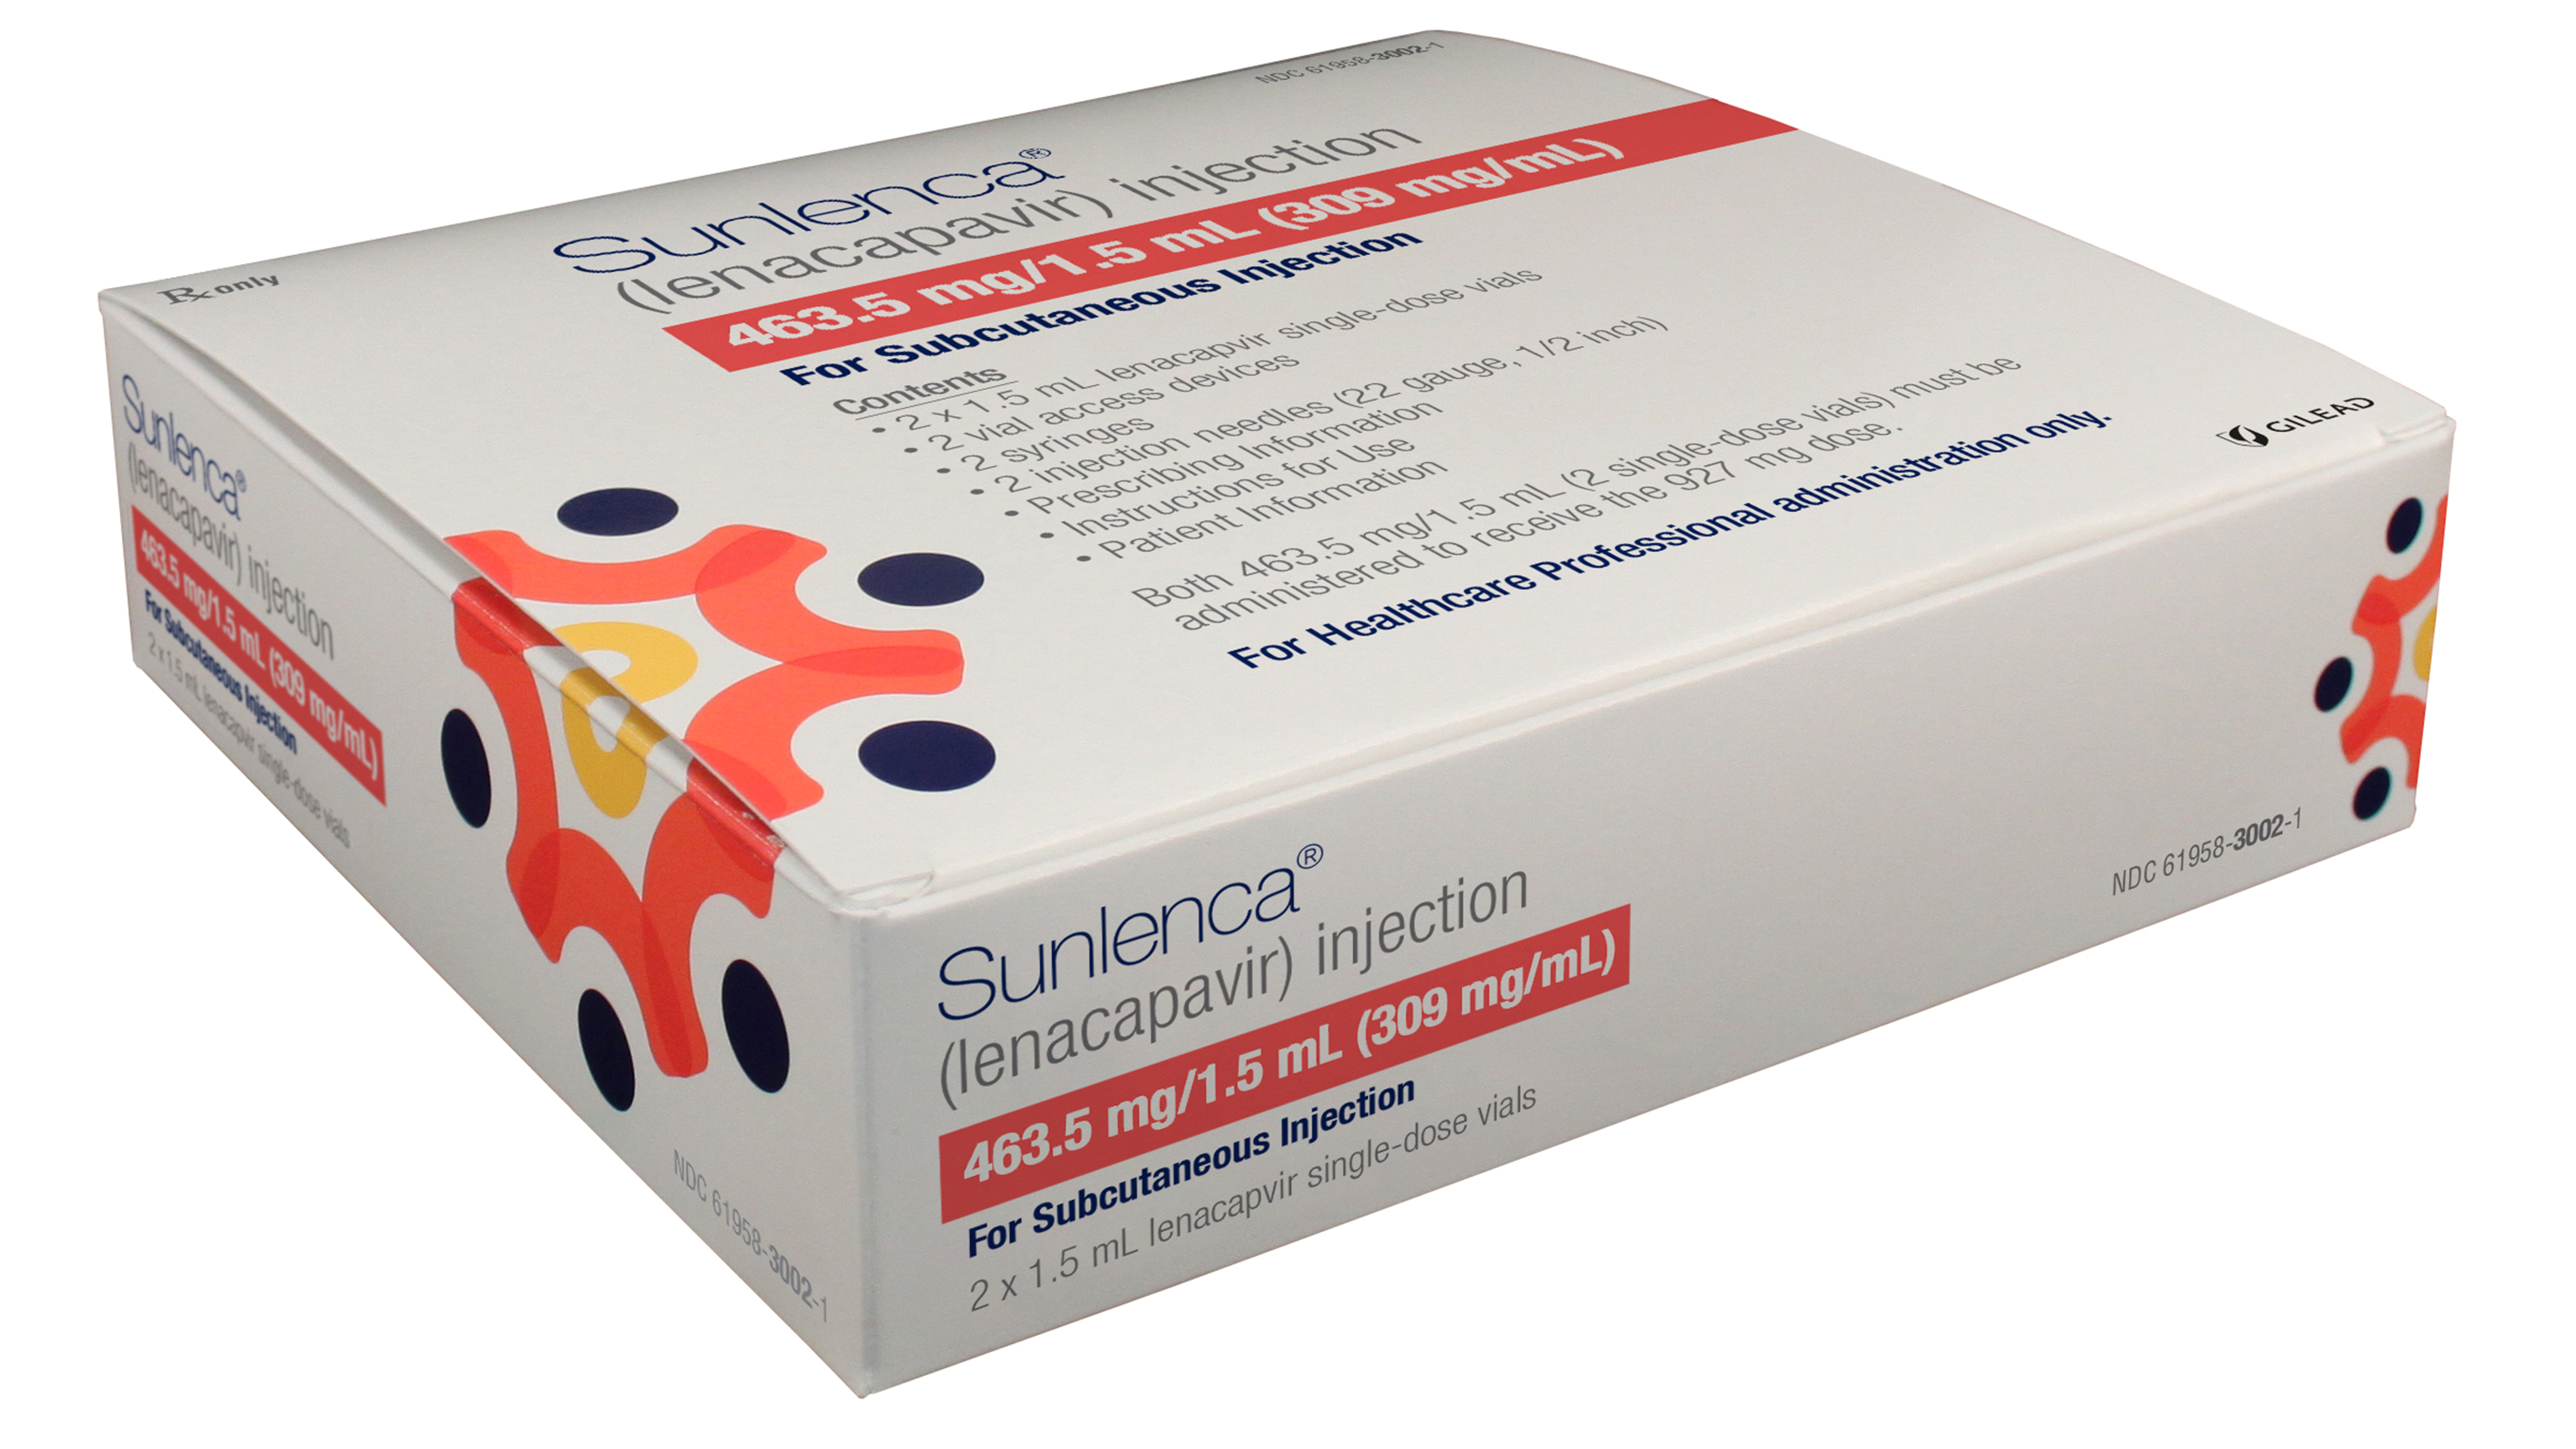 Sunlenca (lenacapavir) Receives FDA Approval as HIV Treatment Option for Multi-Drug Resistant Infection